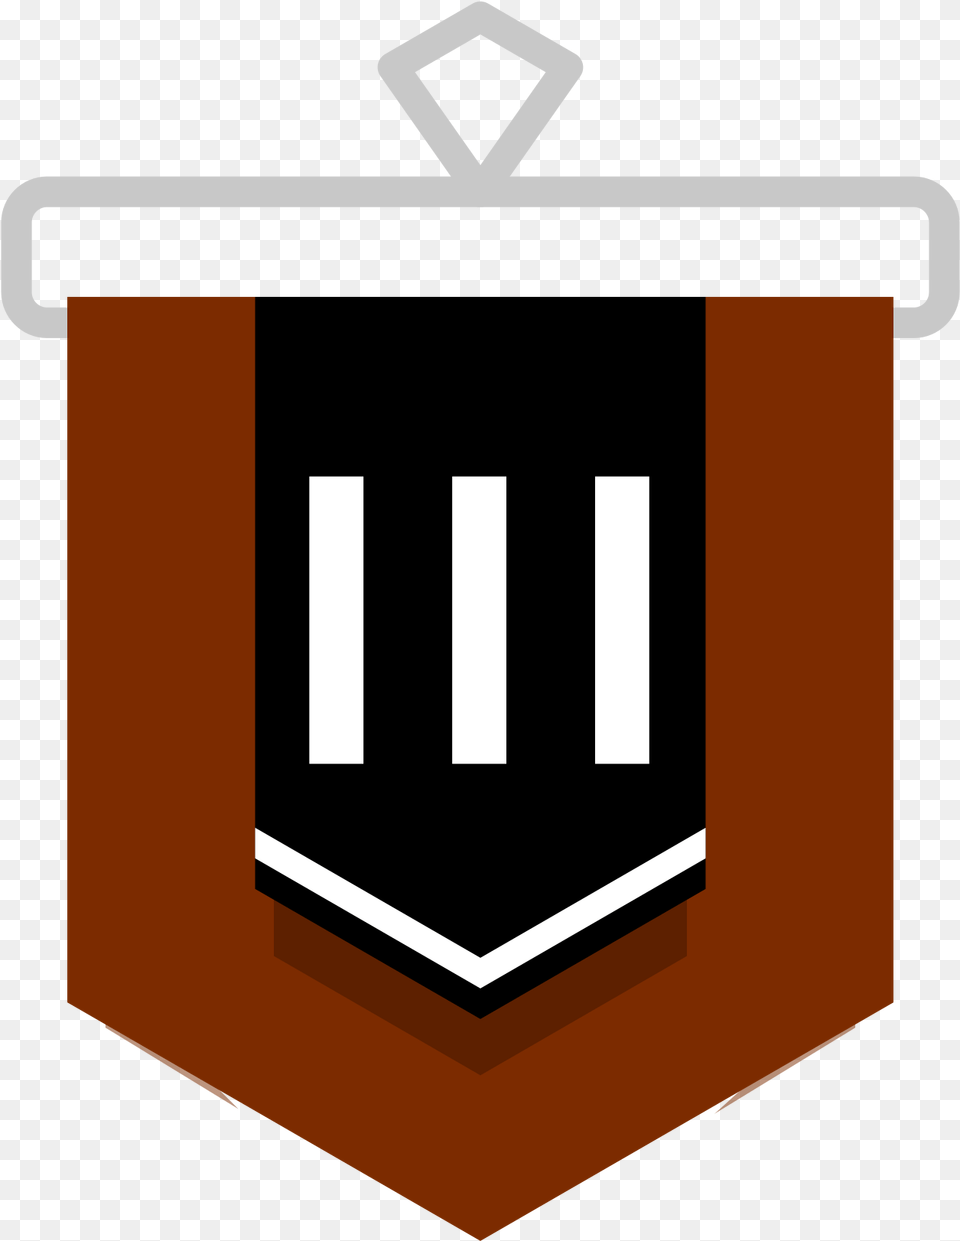 Copper Iii Bronze 3 Rainbow Six Siege, Armor, Mailbox, Shield, Symbol Png